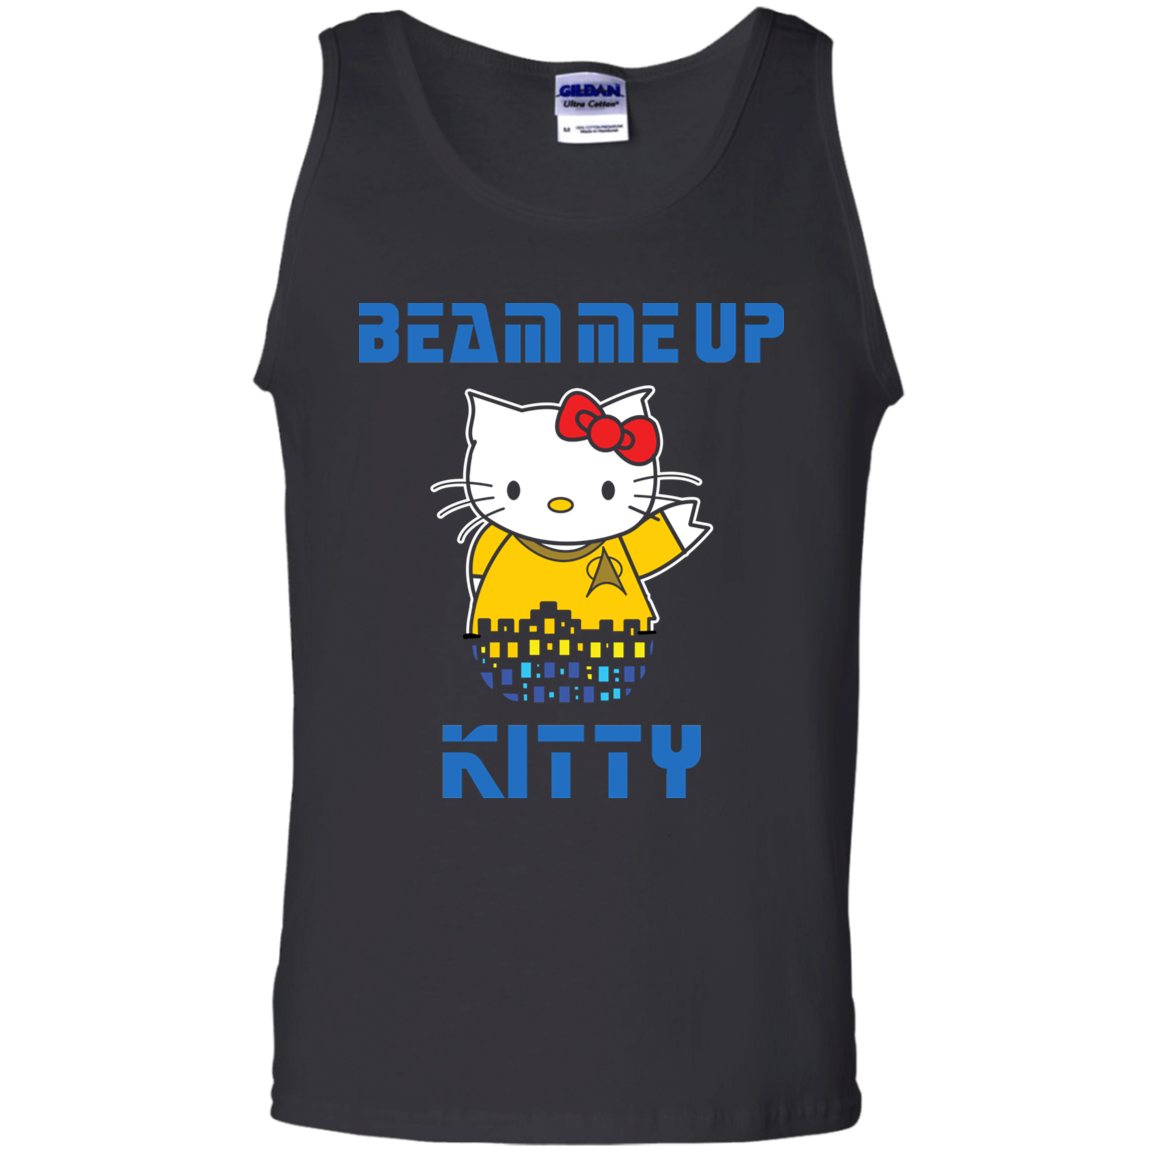 ArtichokeUSA Custom Design. Beam Me Up Kitty. Fan Art / Parody. Men's 100% Cotton Tank Top